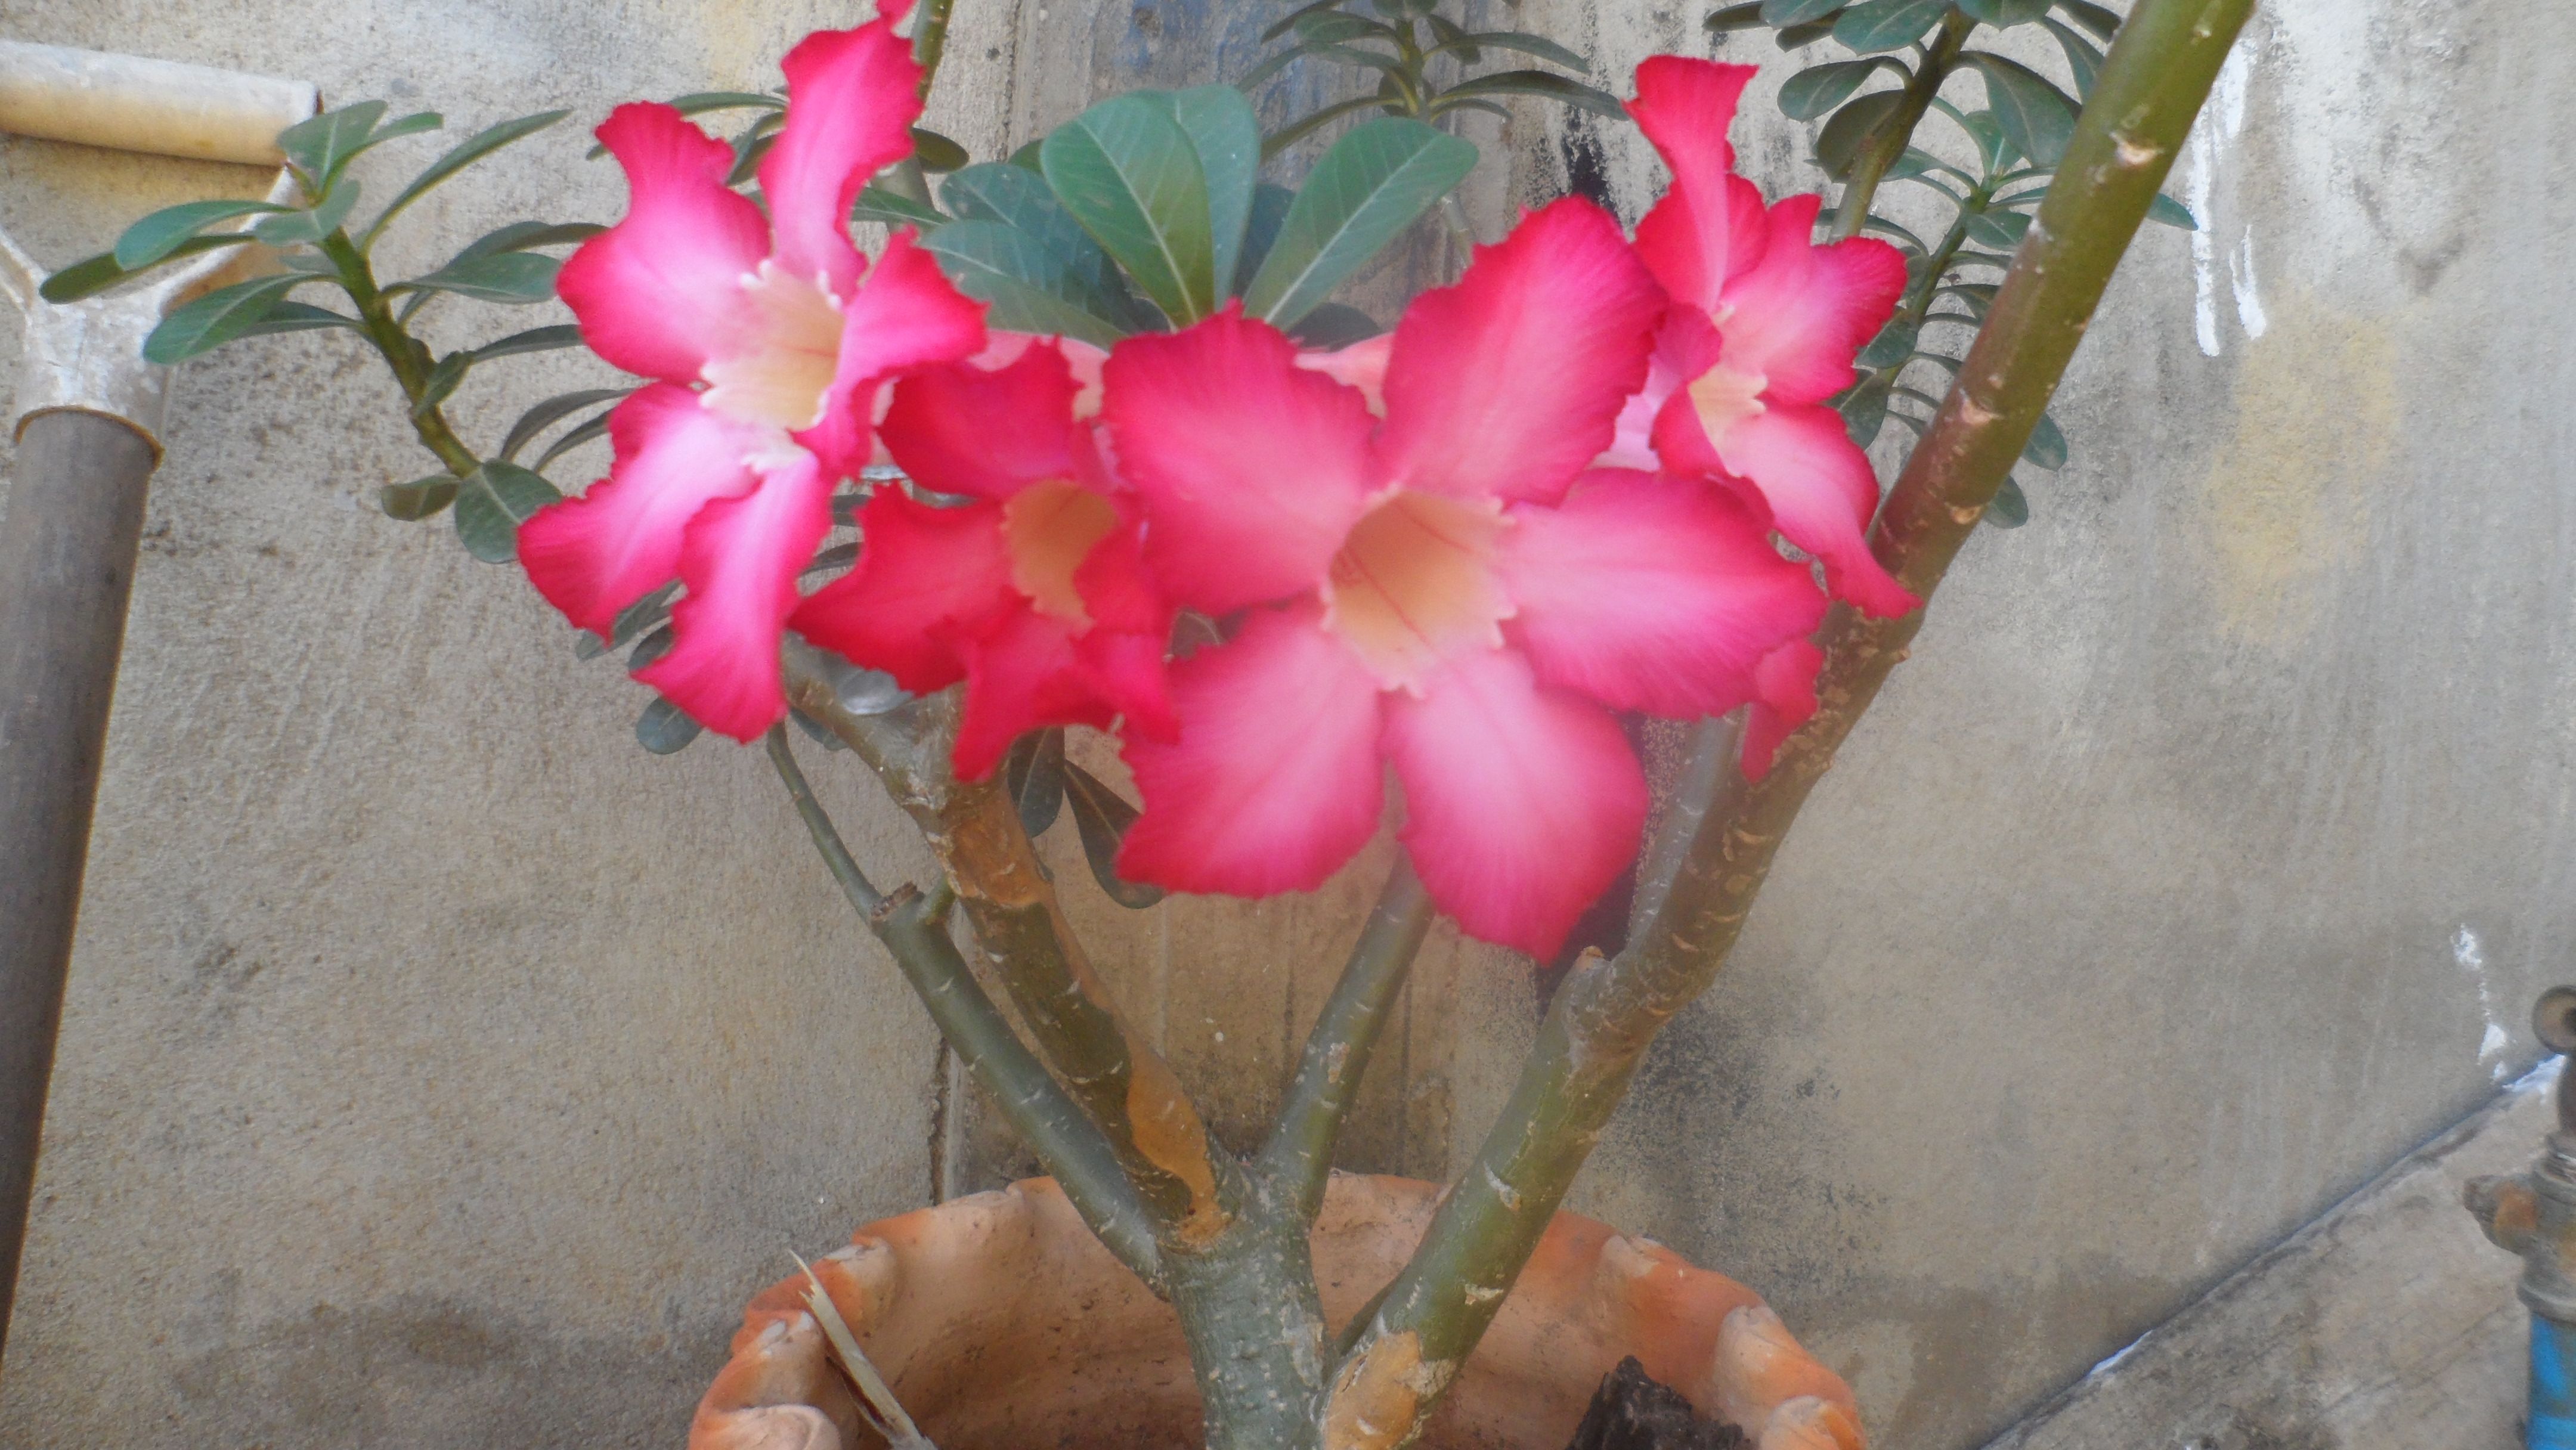 Rosa de jerico o flor del desierto — Steemit